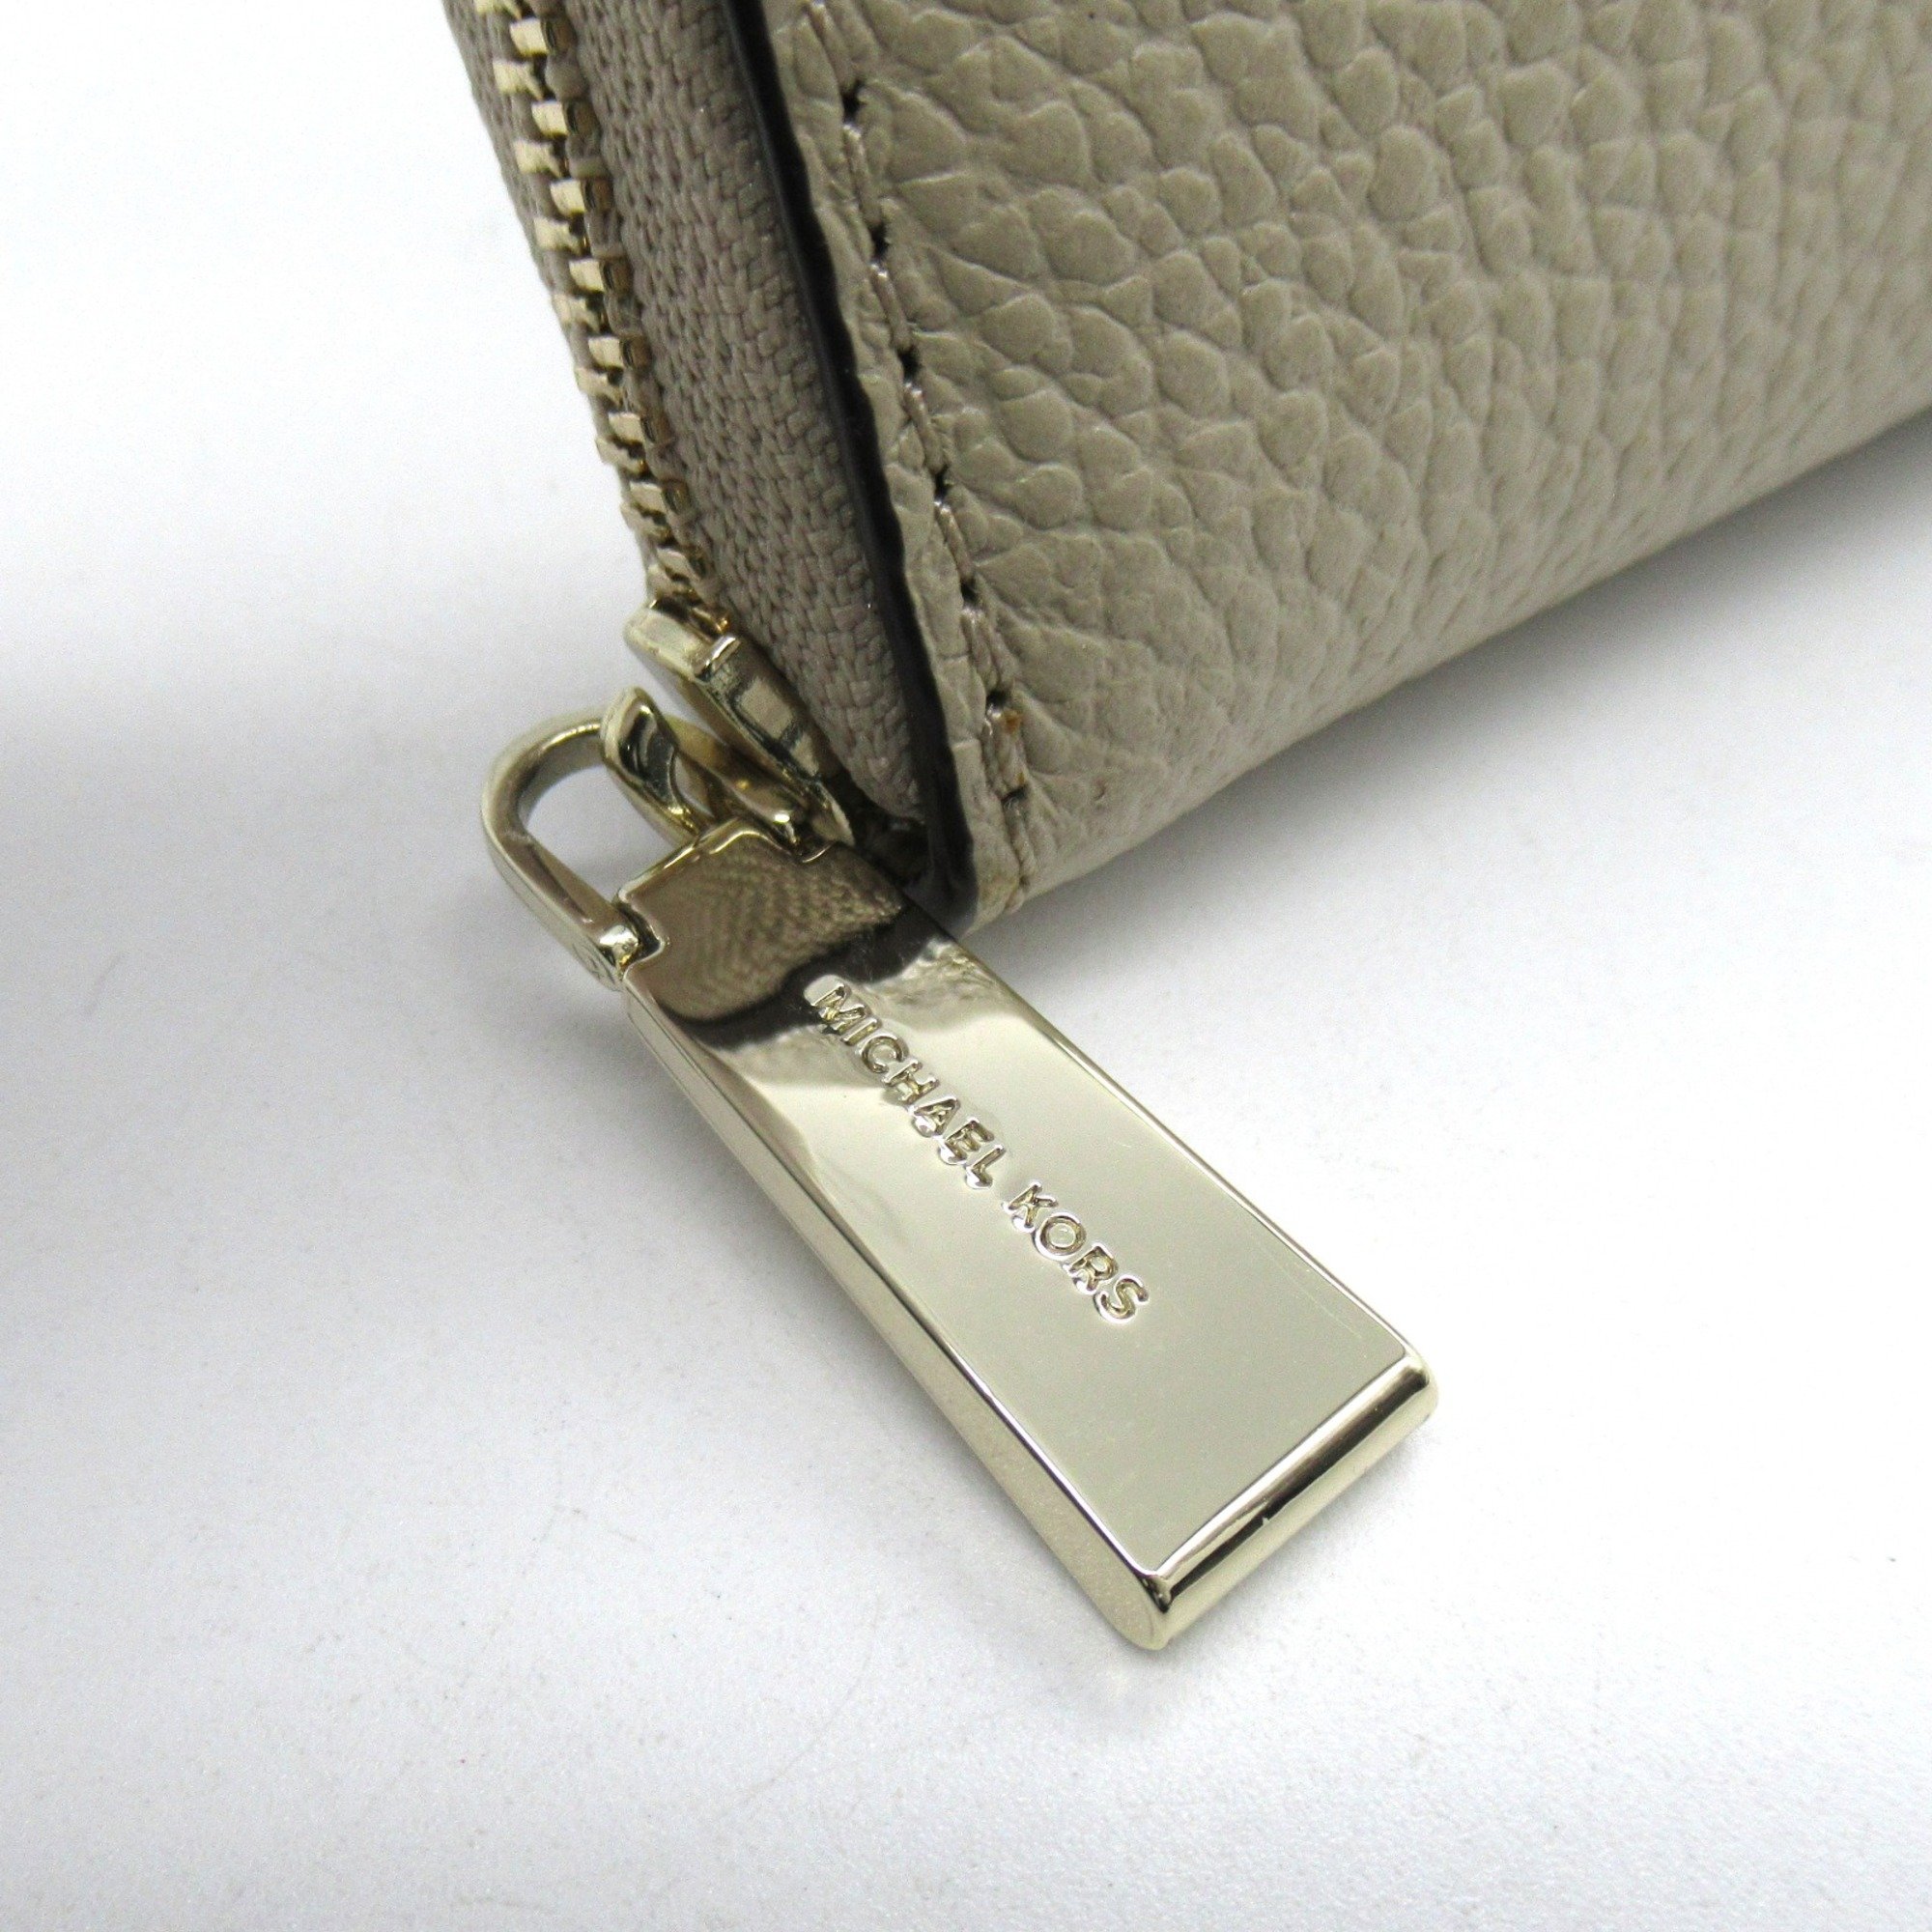 Michael Kors coin purse Wallet Beige leather 32T8TF6Z2T143